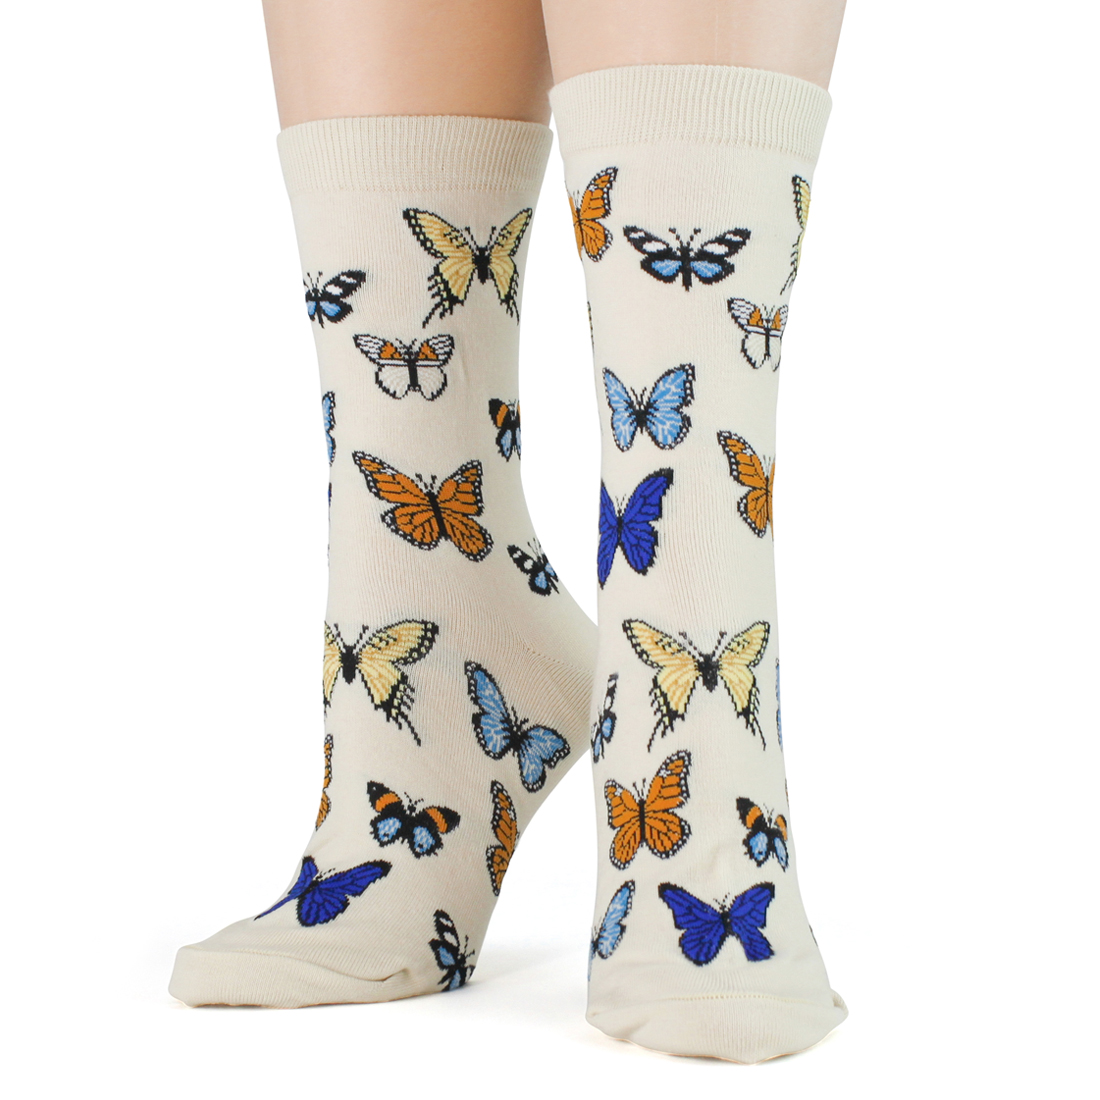 Catterfly Sock It To Me Women's Knee High Socks New Novelty Butterfly Fashion